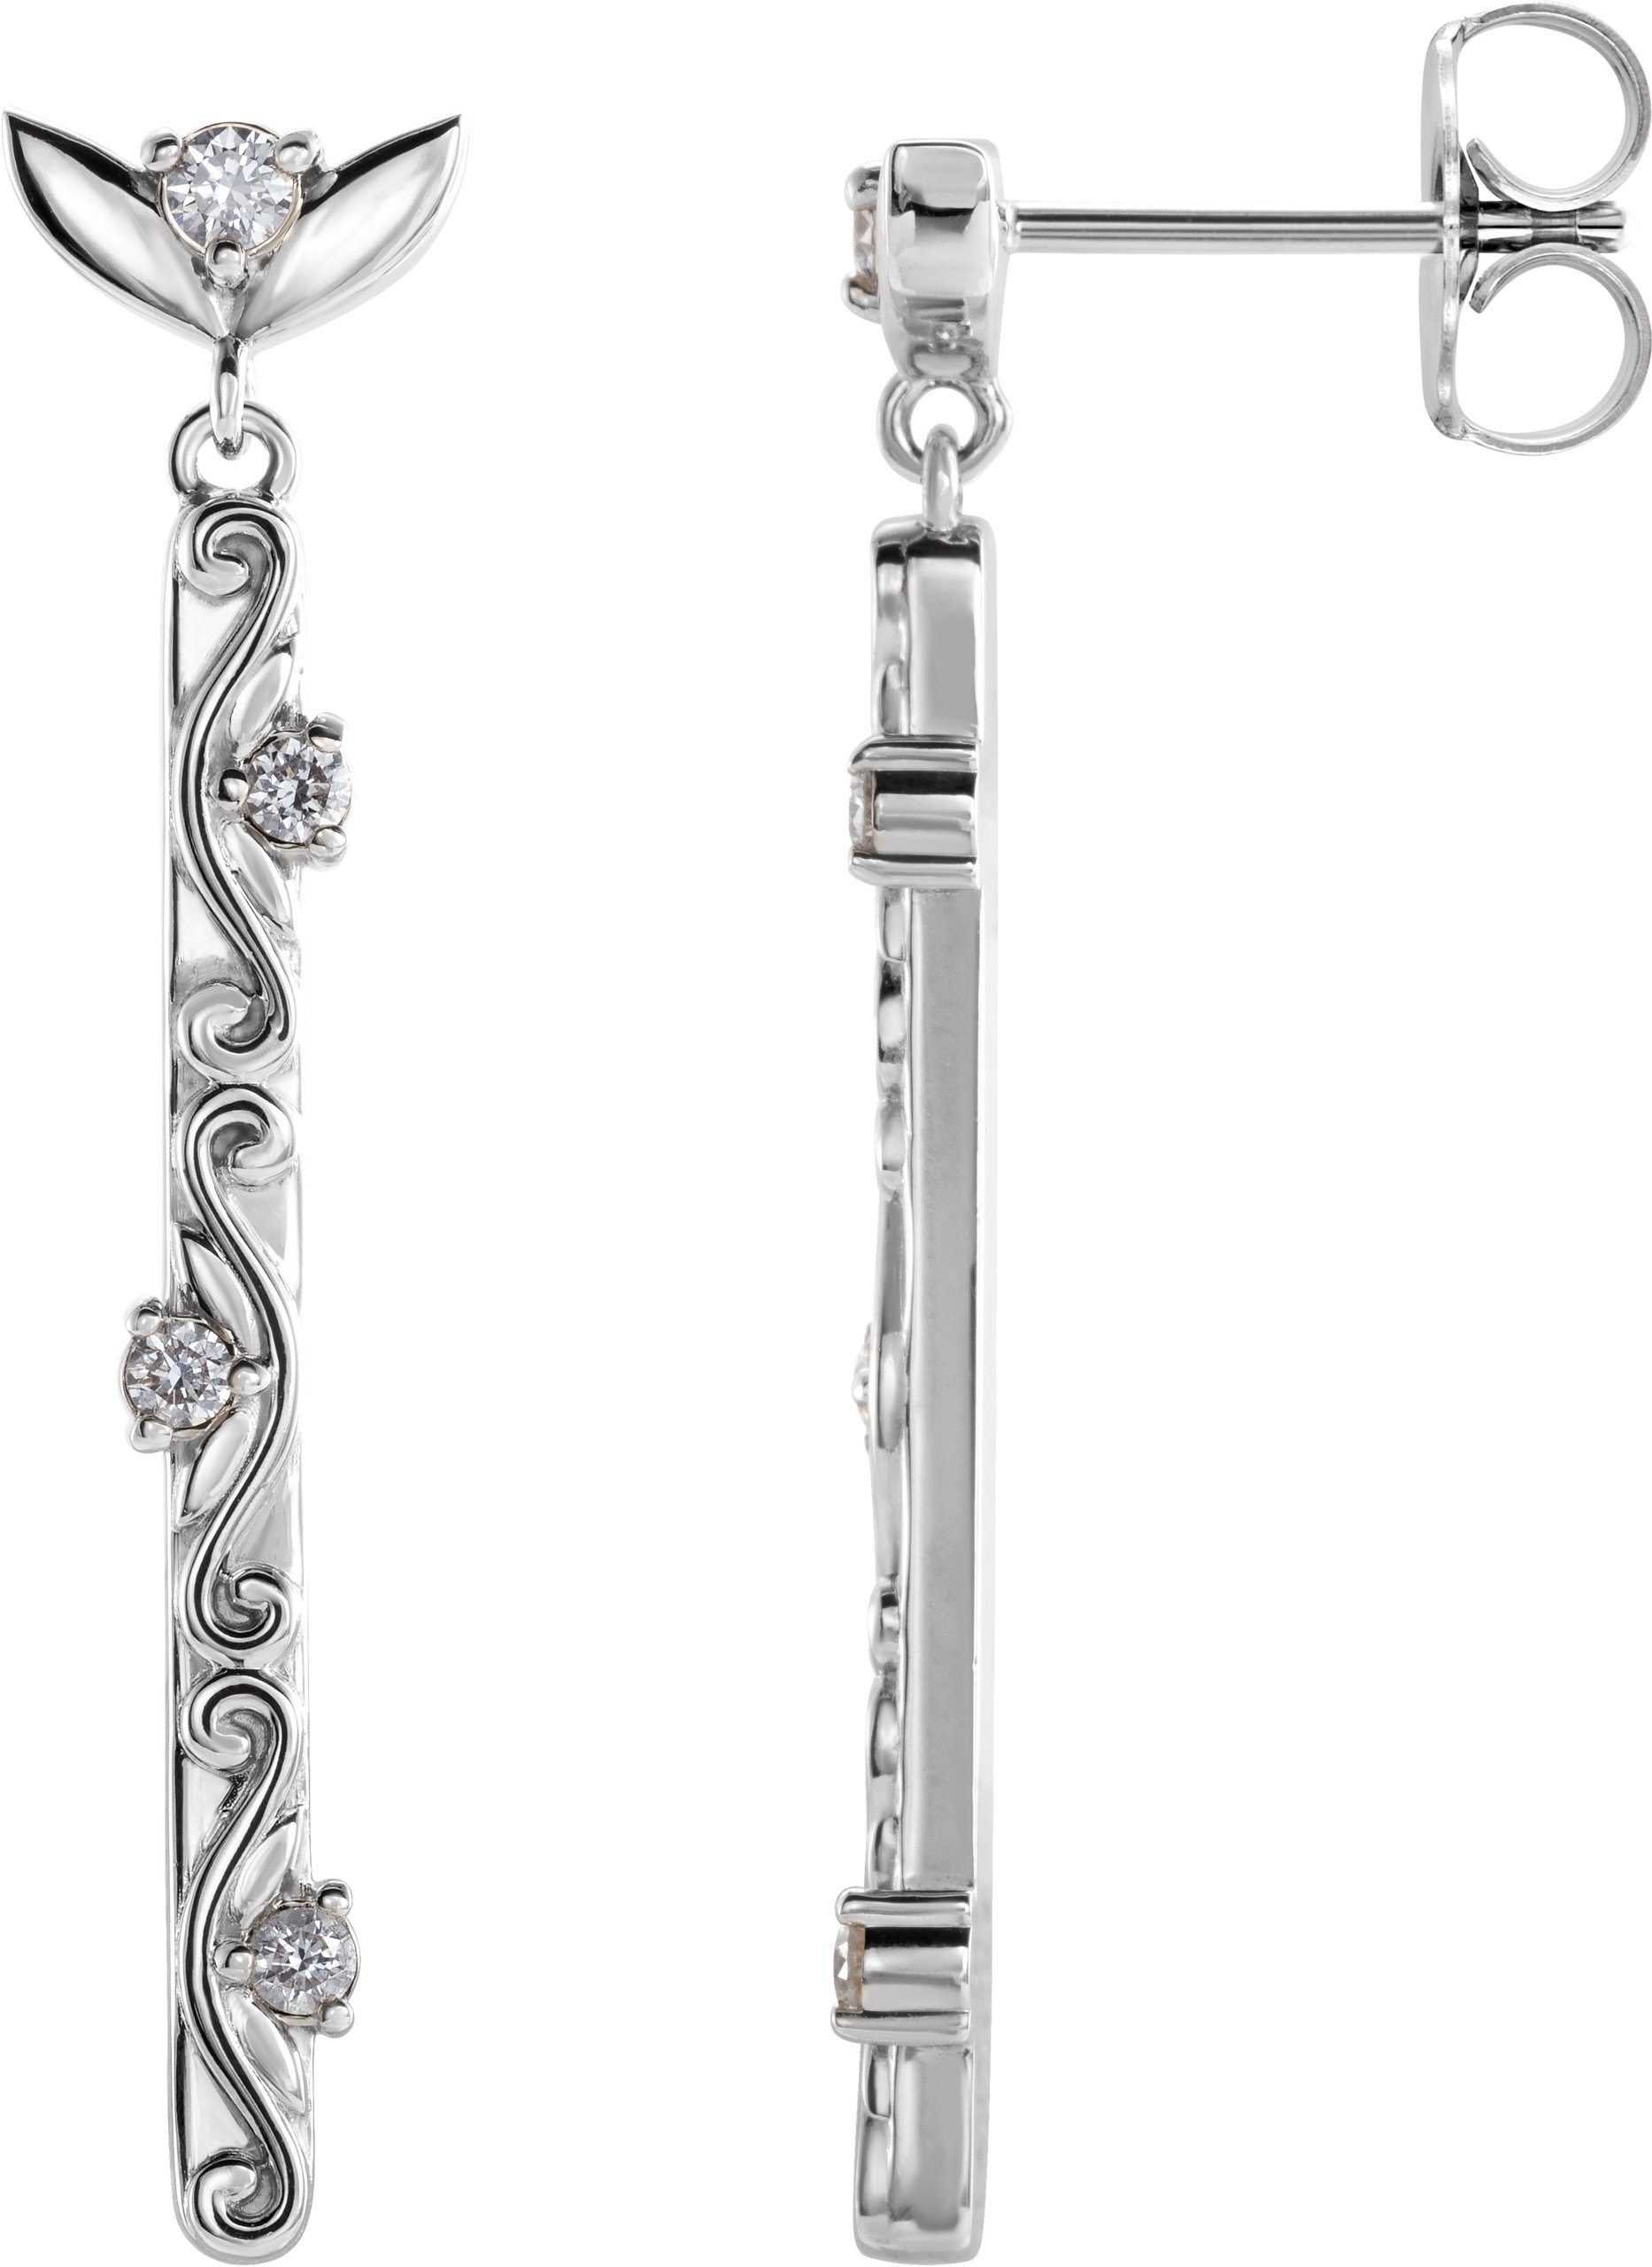 Sterling Silver 1/8 CTW Diamond Vintage-Inspired Dangle Earrings